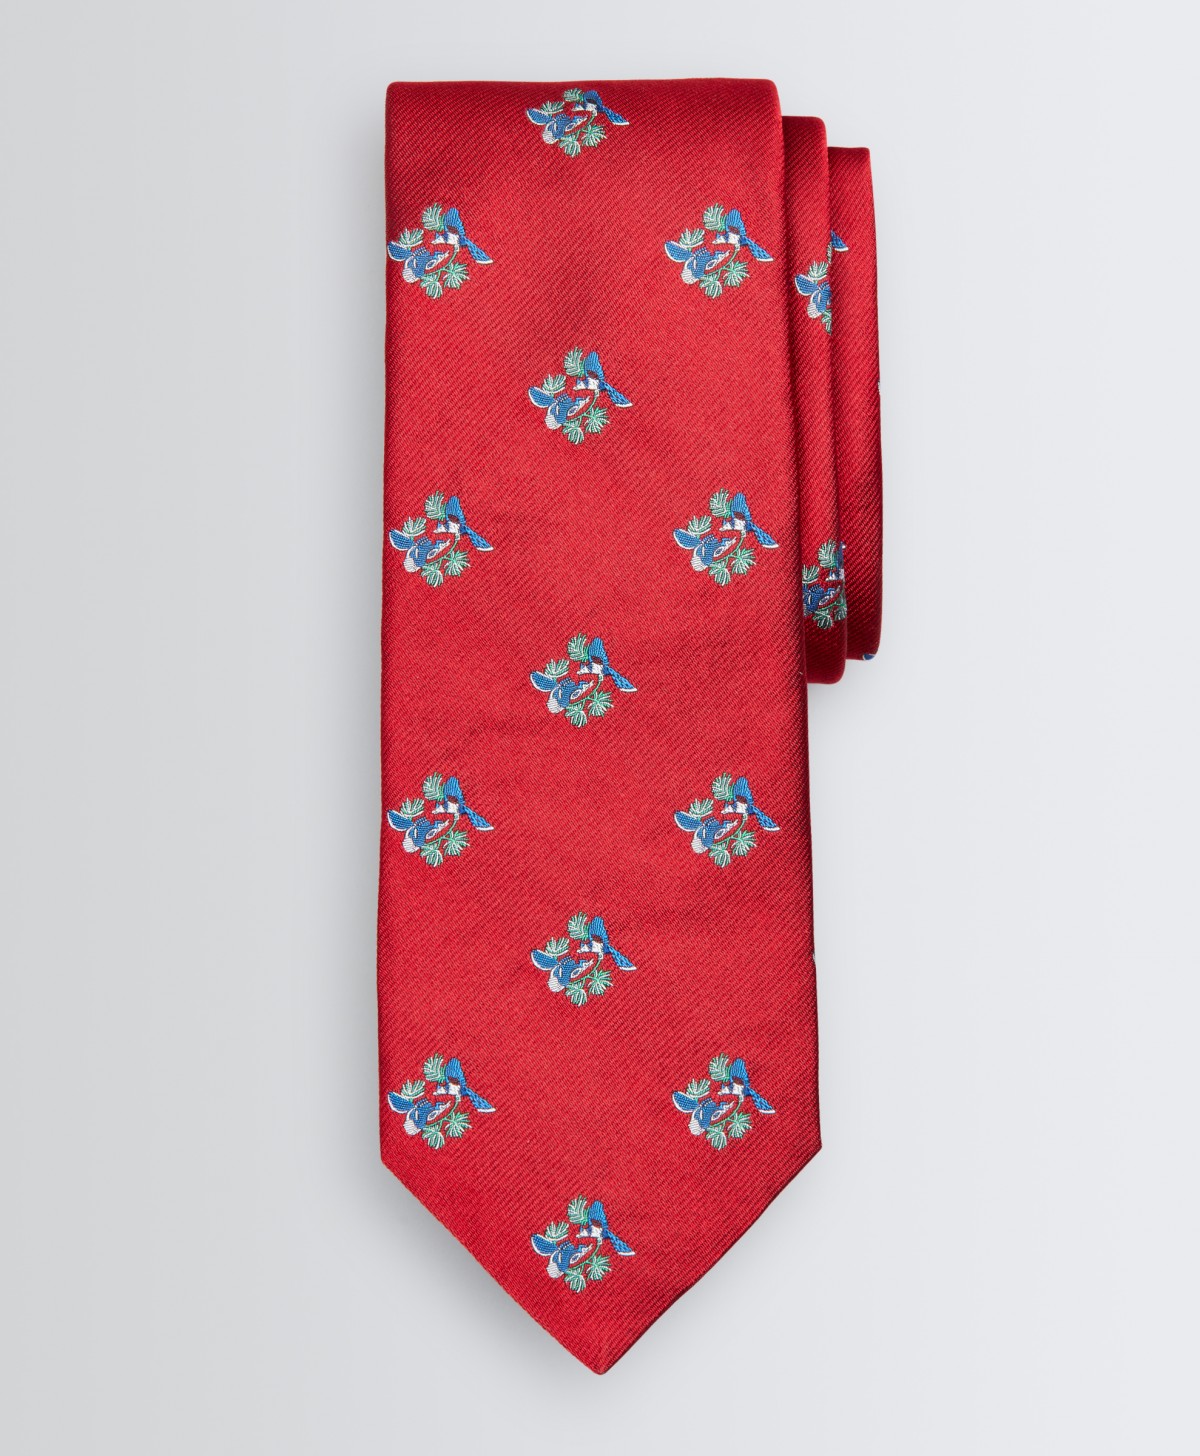 Cardinals Printed Tie